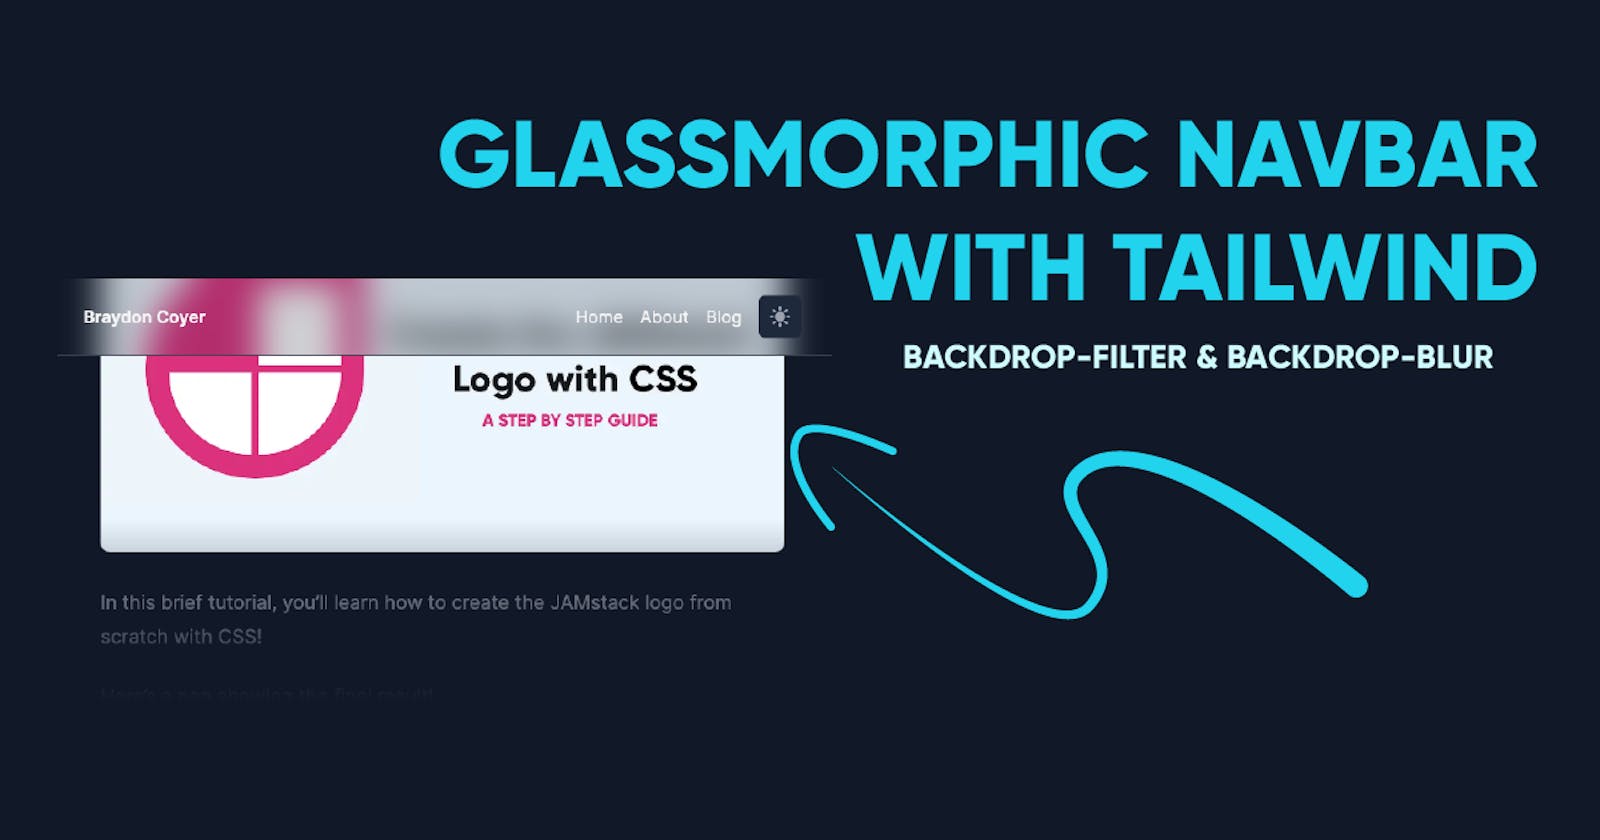 Build a Glassmorphic Navbar with TailwindCSS backdrop-filter & backdrop-blur